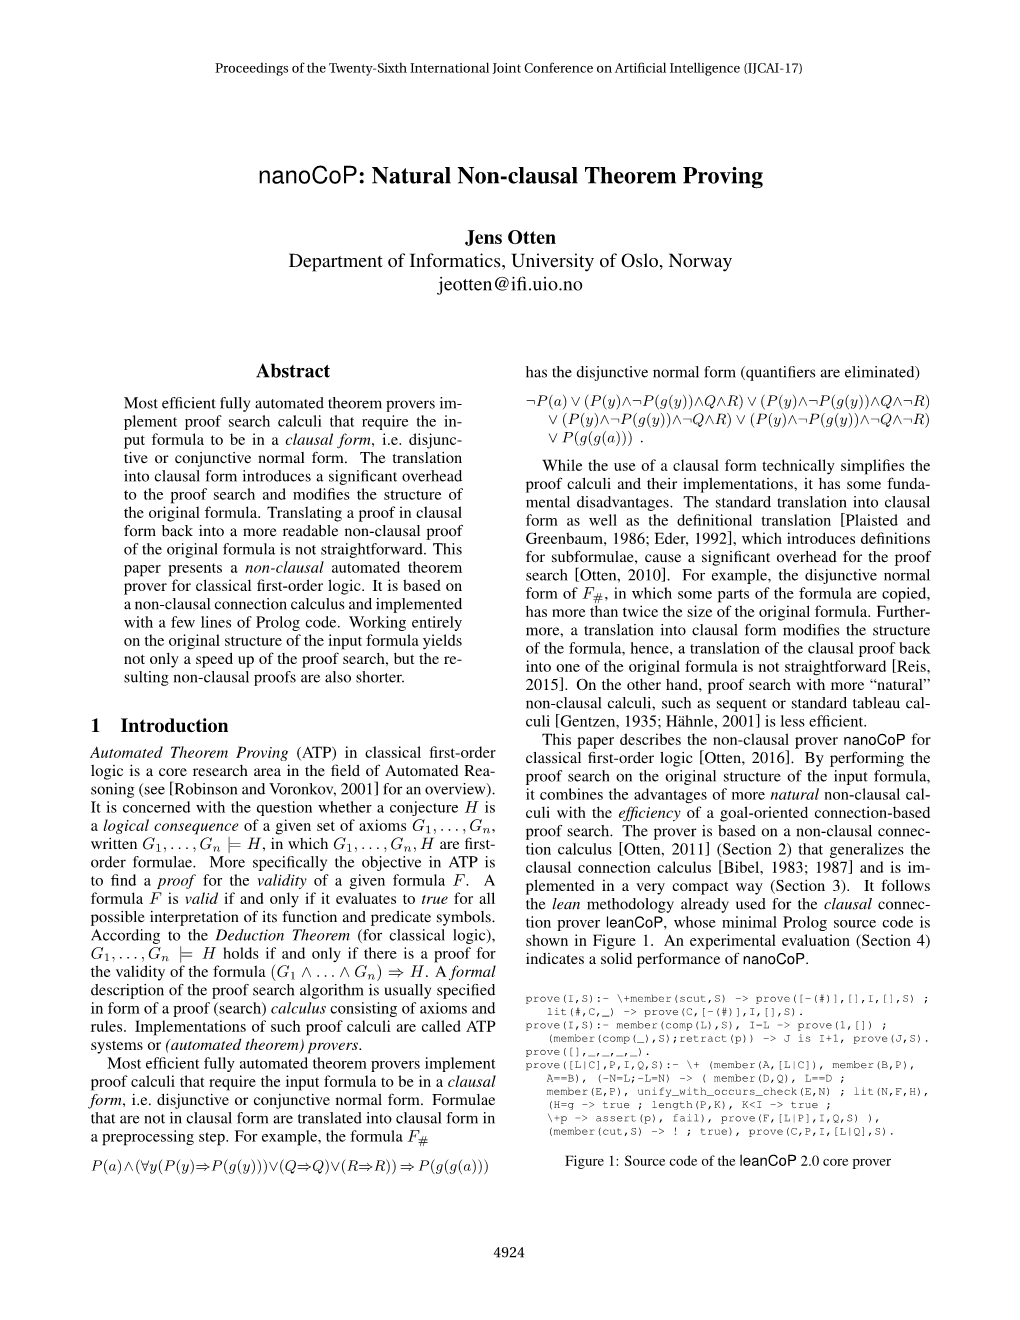 Nanocop: Natural Non-Clausal Theorem Proving